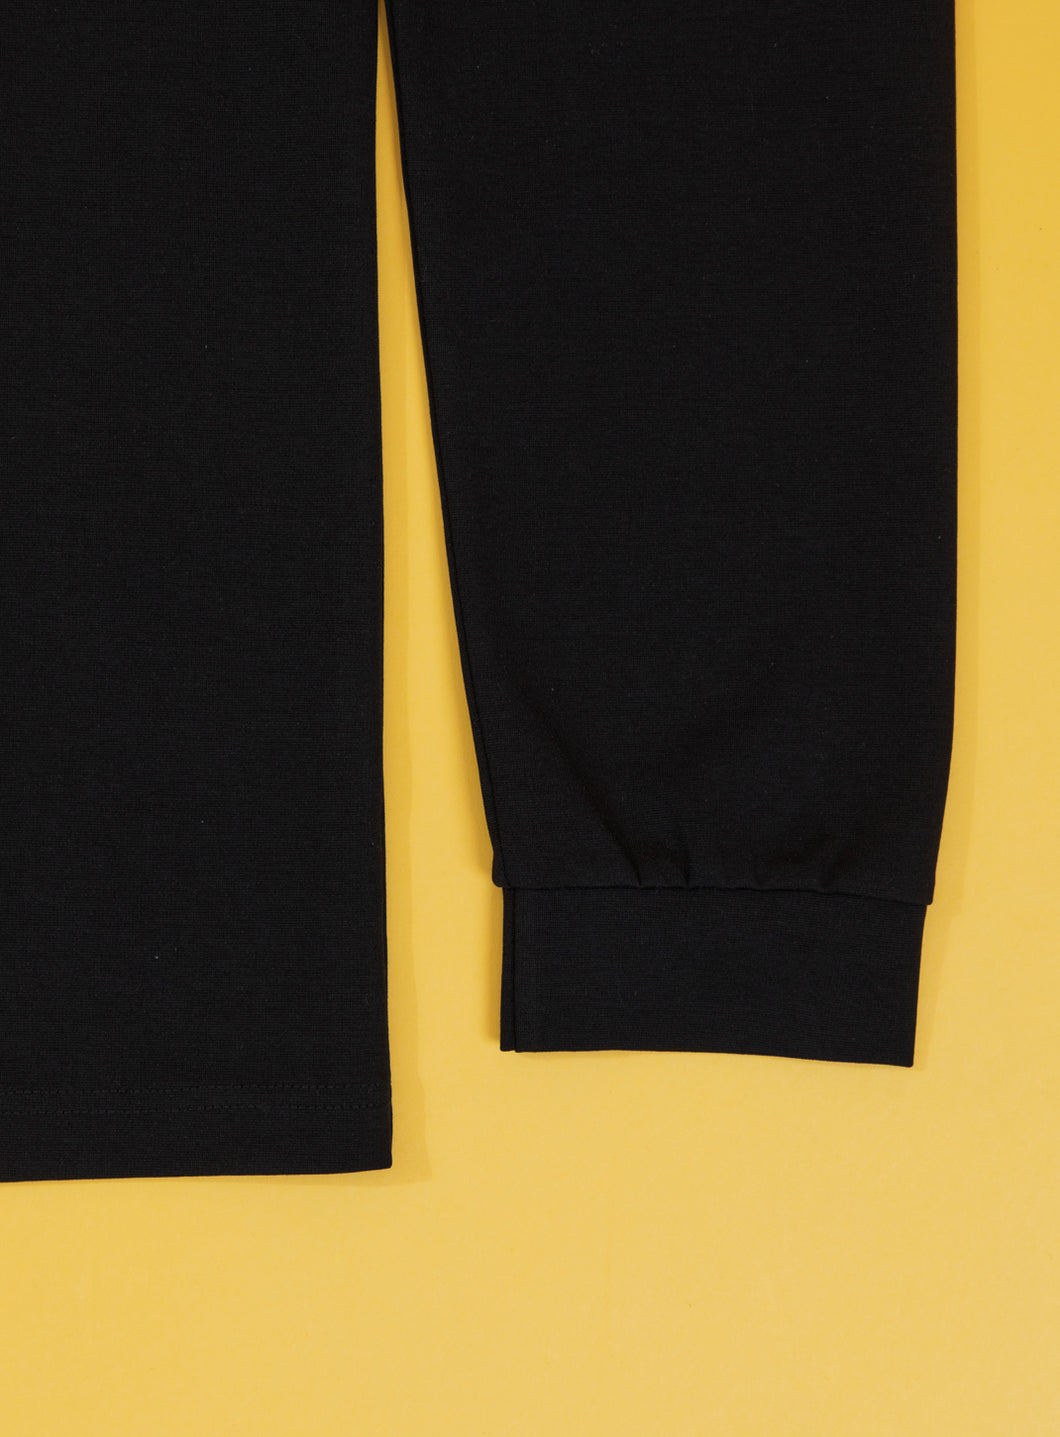 Zipped Poloshirt in Black Technical Knit